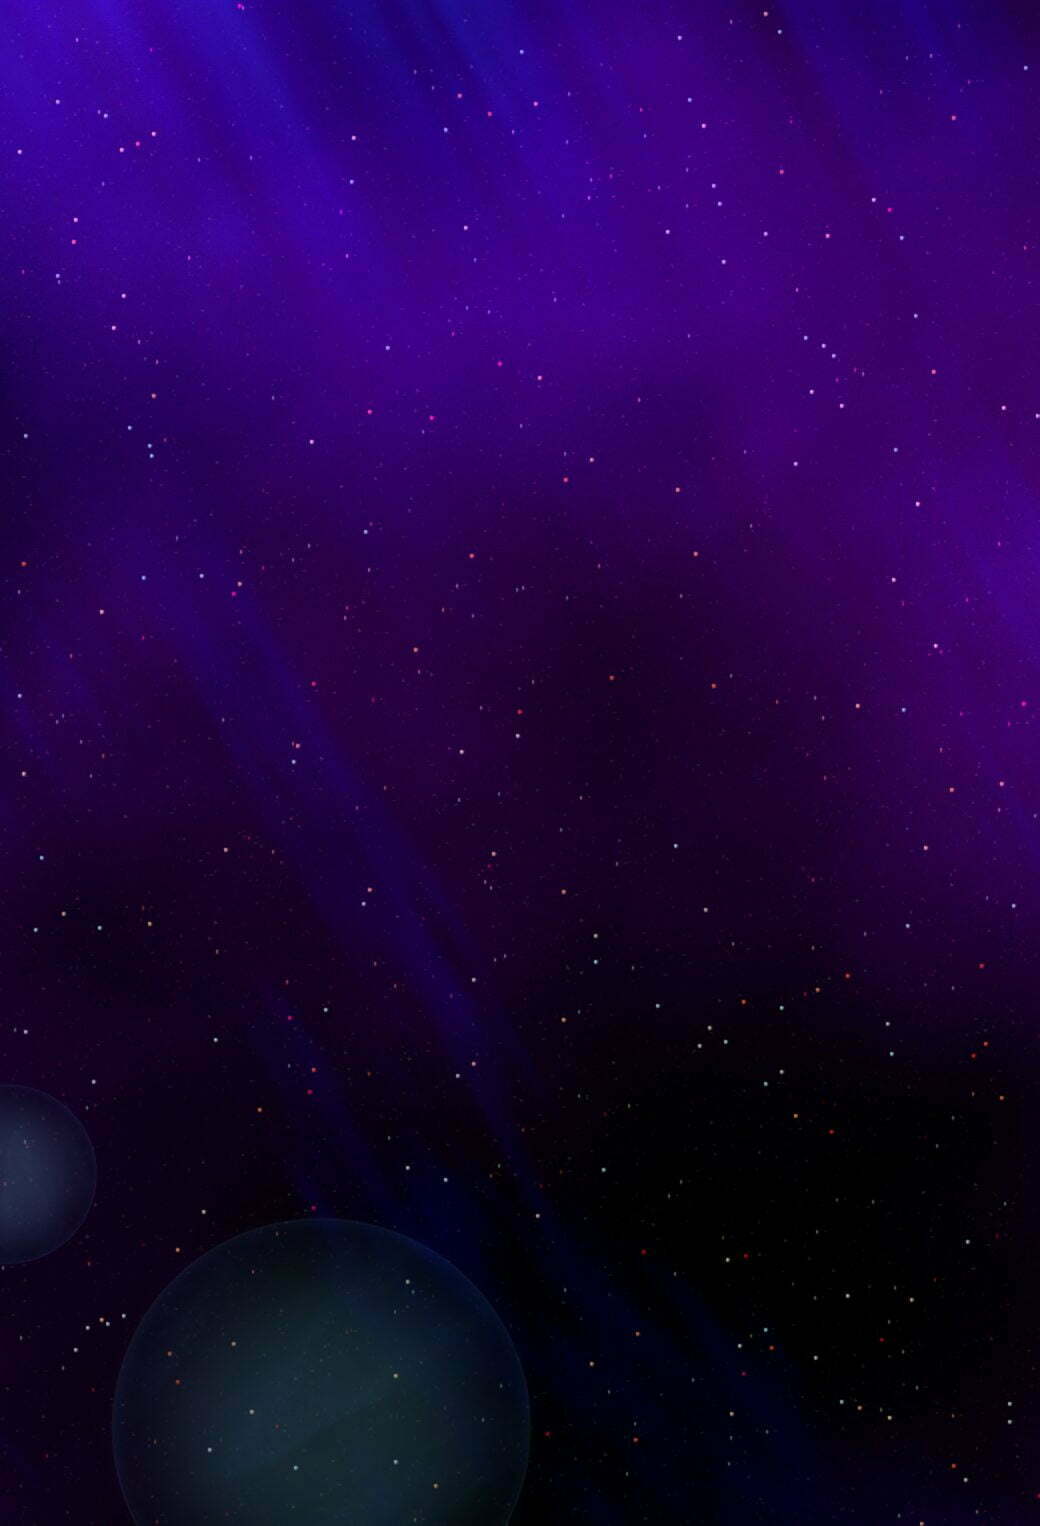 auroral-lights-blue-parallax-wallpaper_1